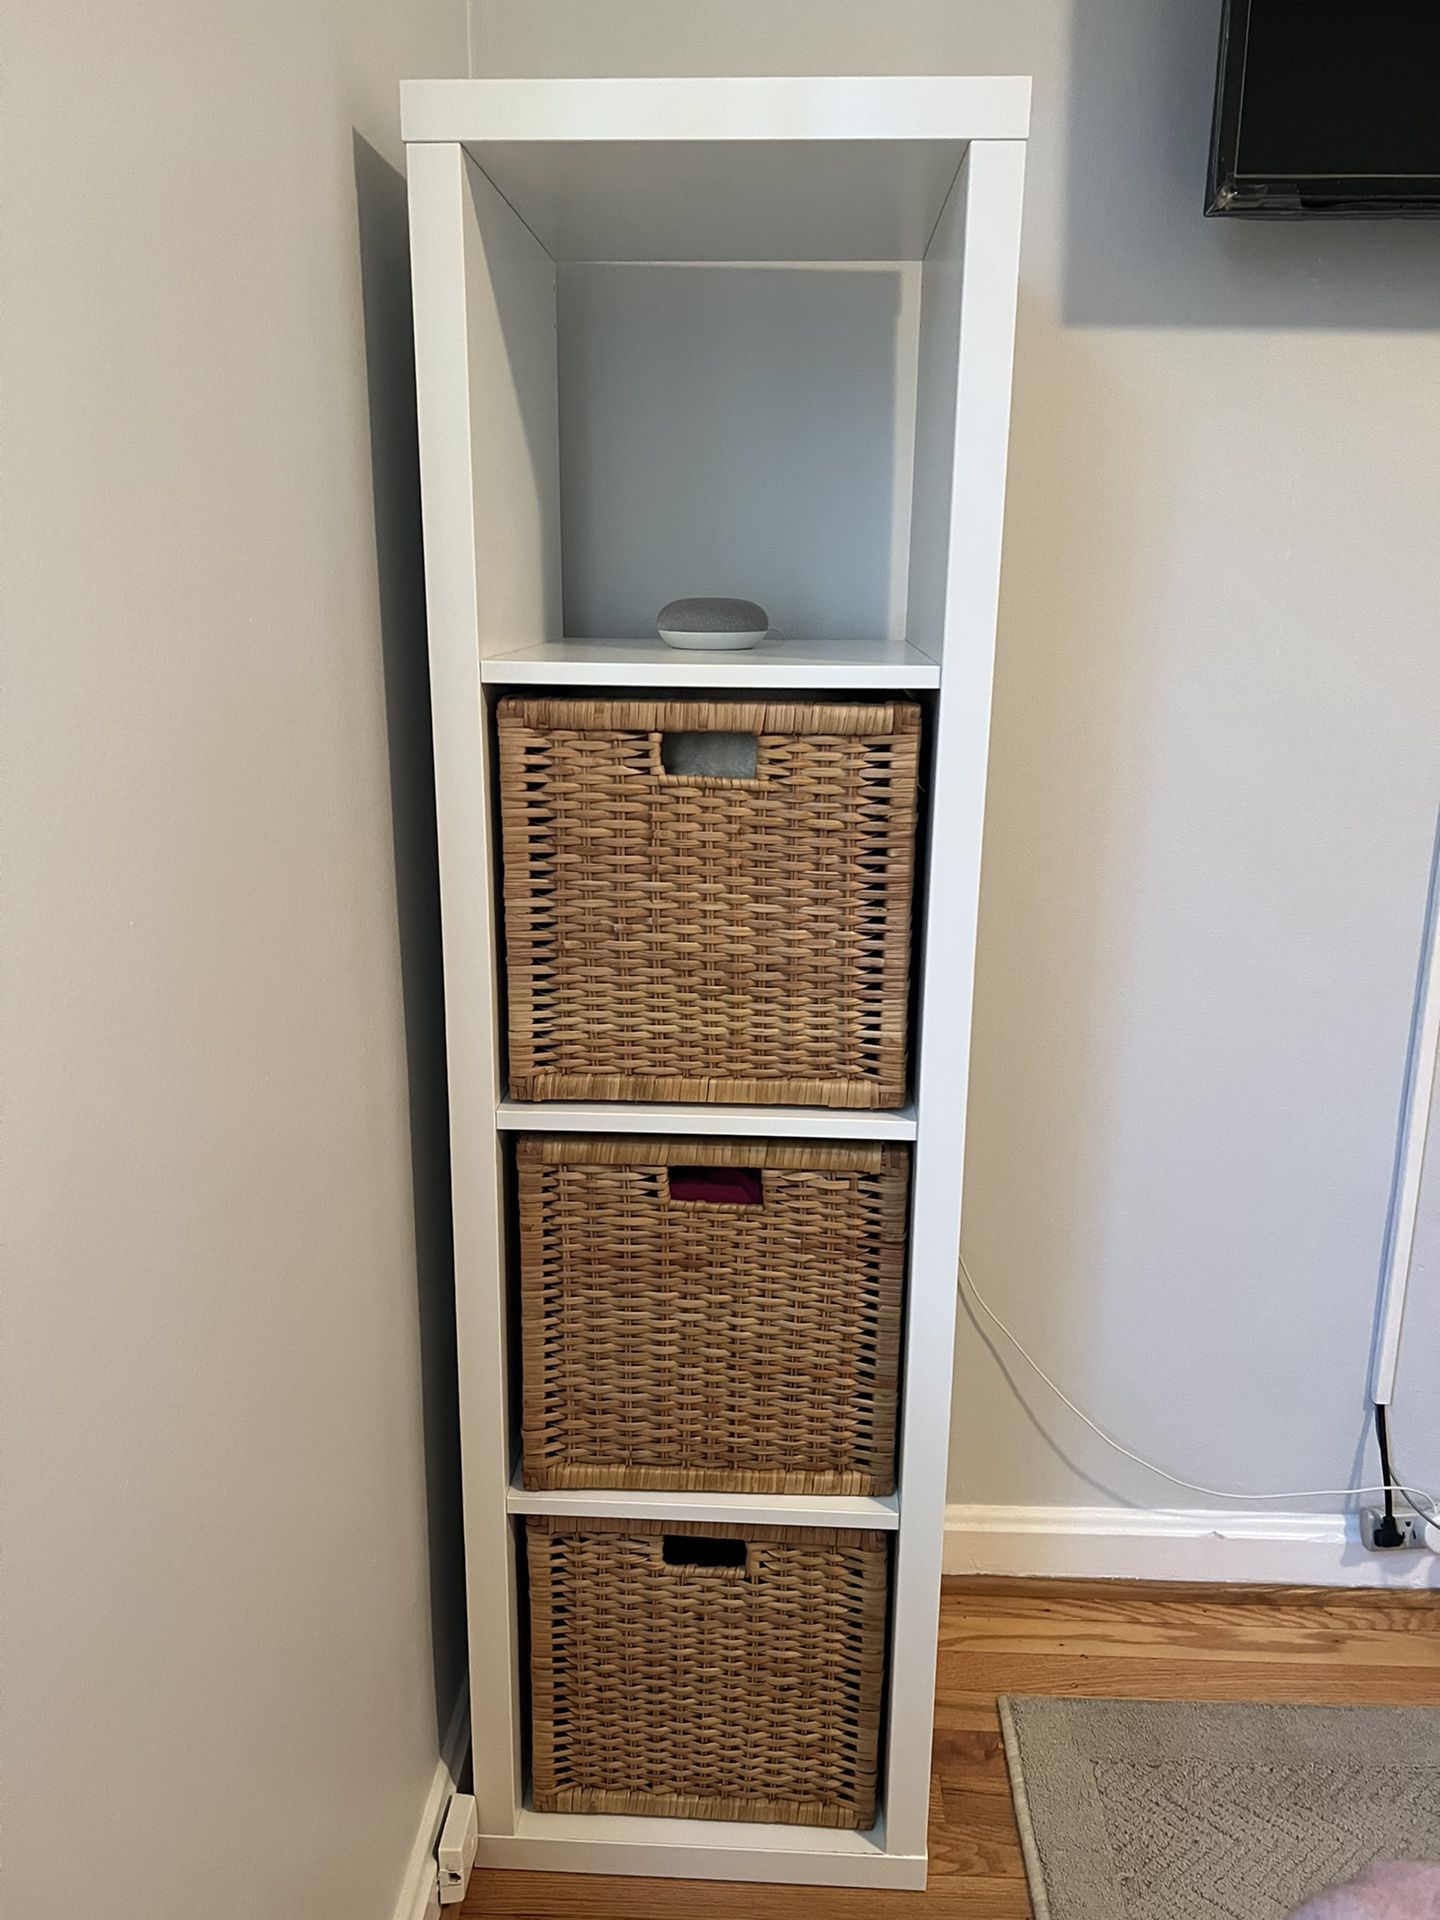 IKEA KALLAX Shelf Unit with Wood Baskets!